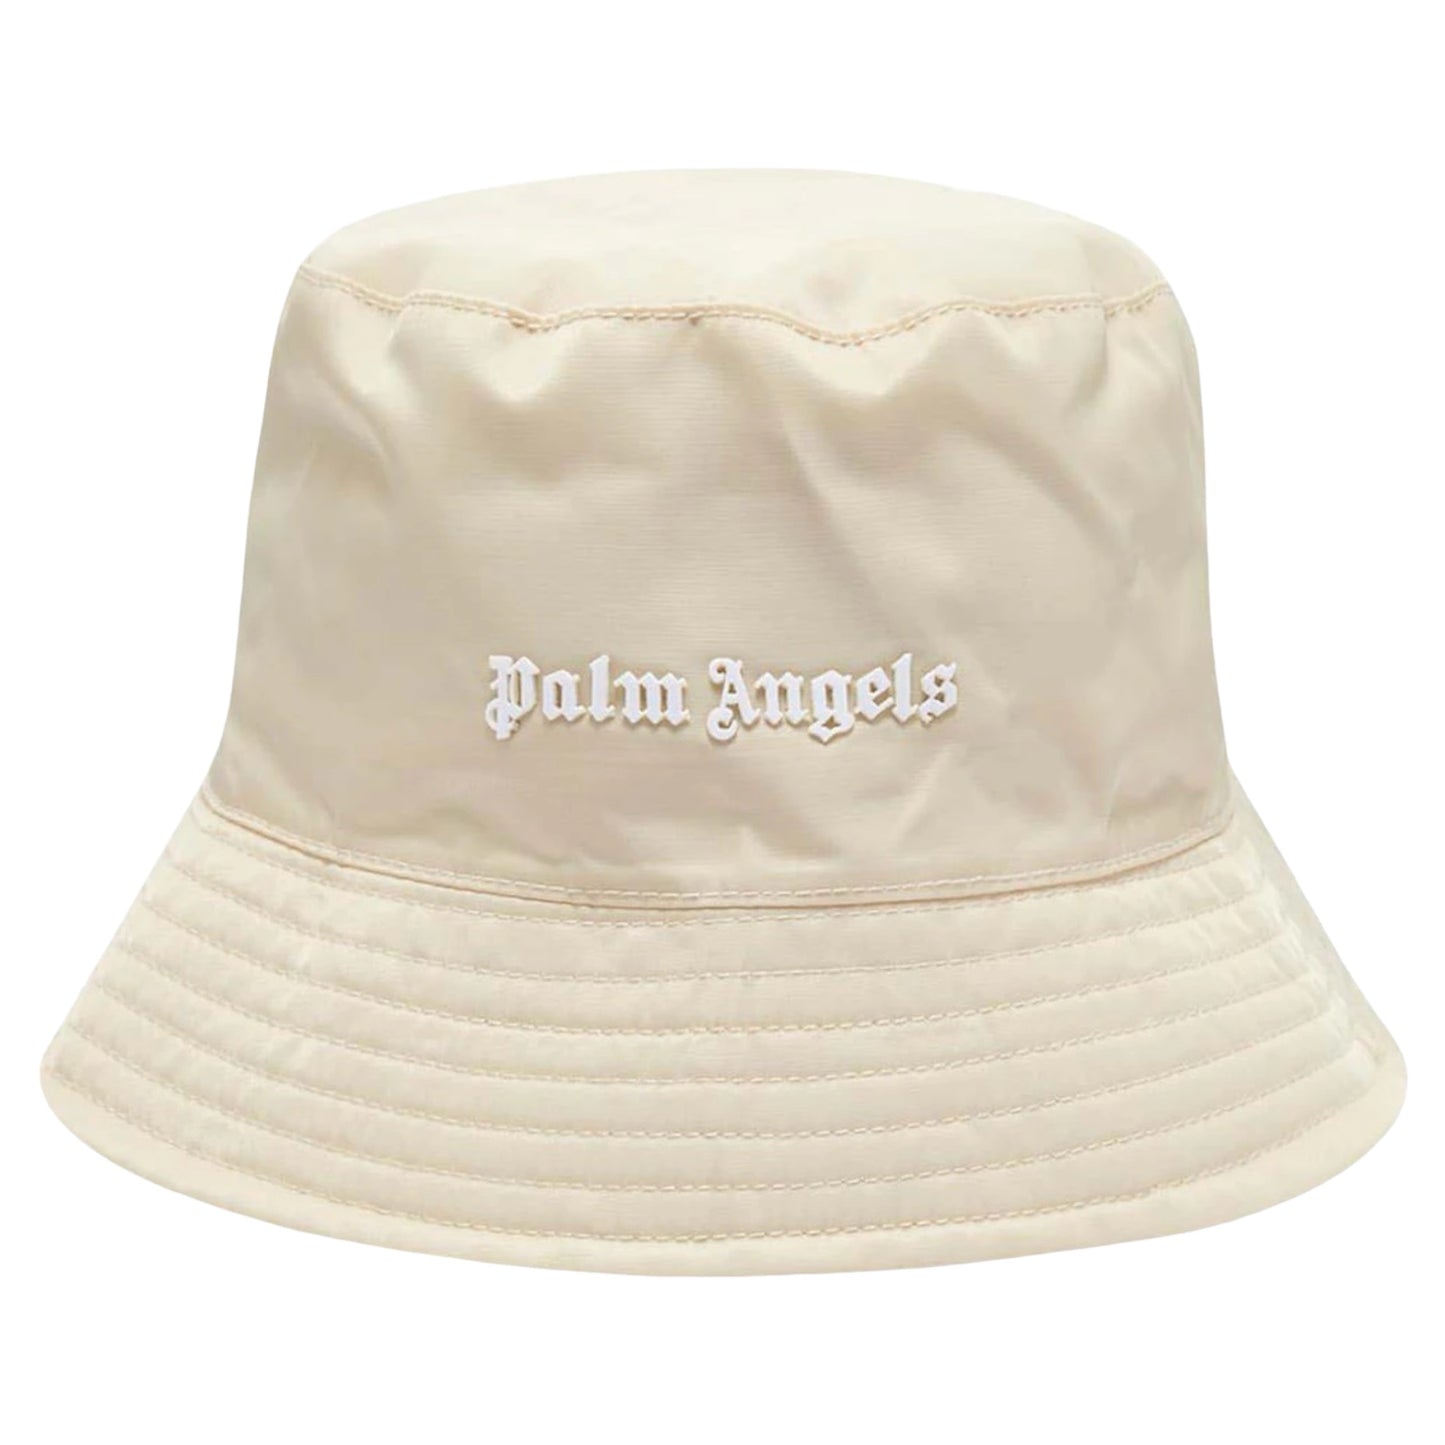 Palm Angels Classic Logo Bucket Hat